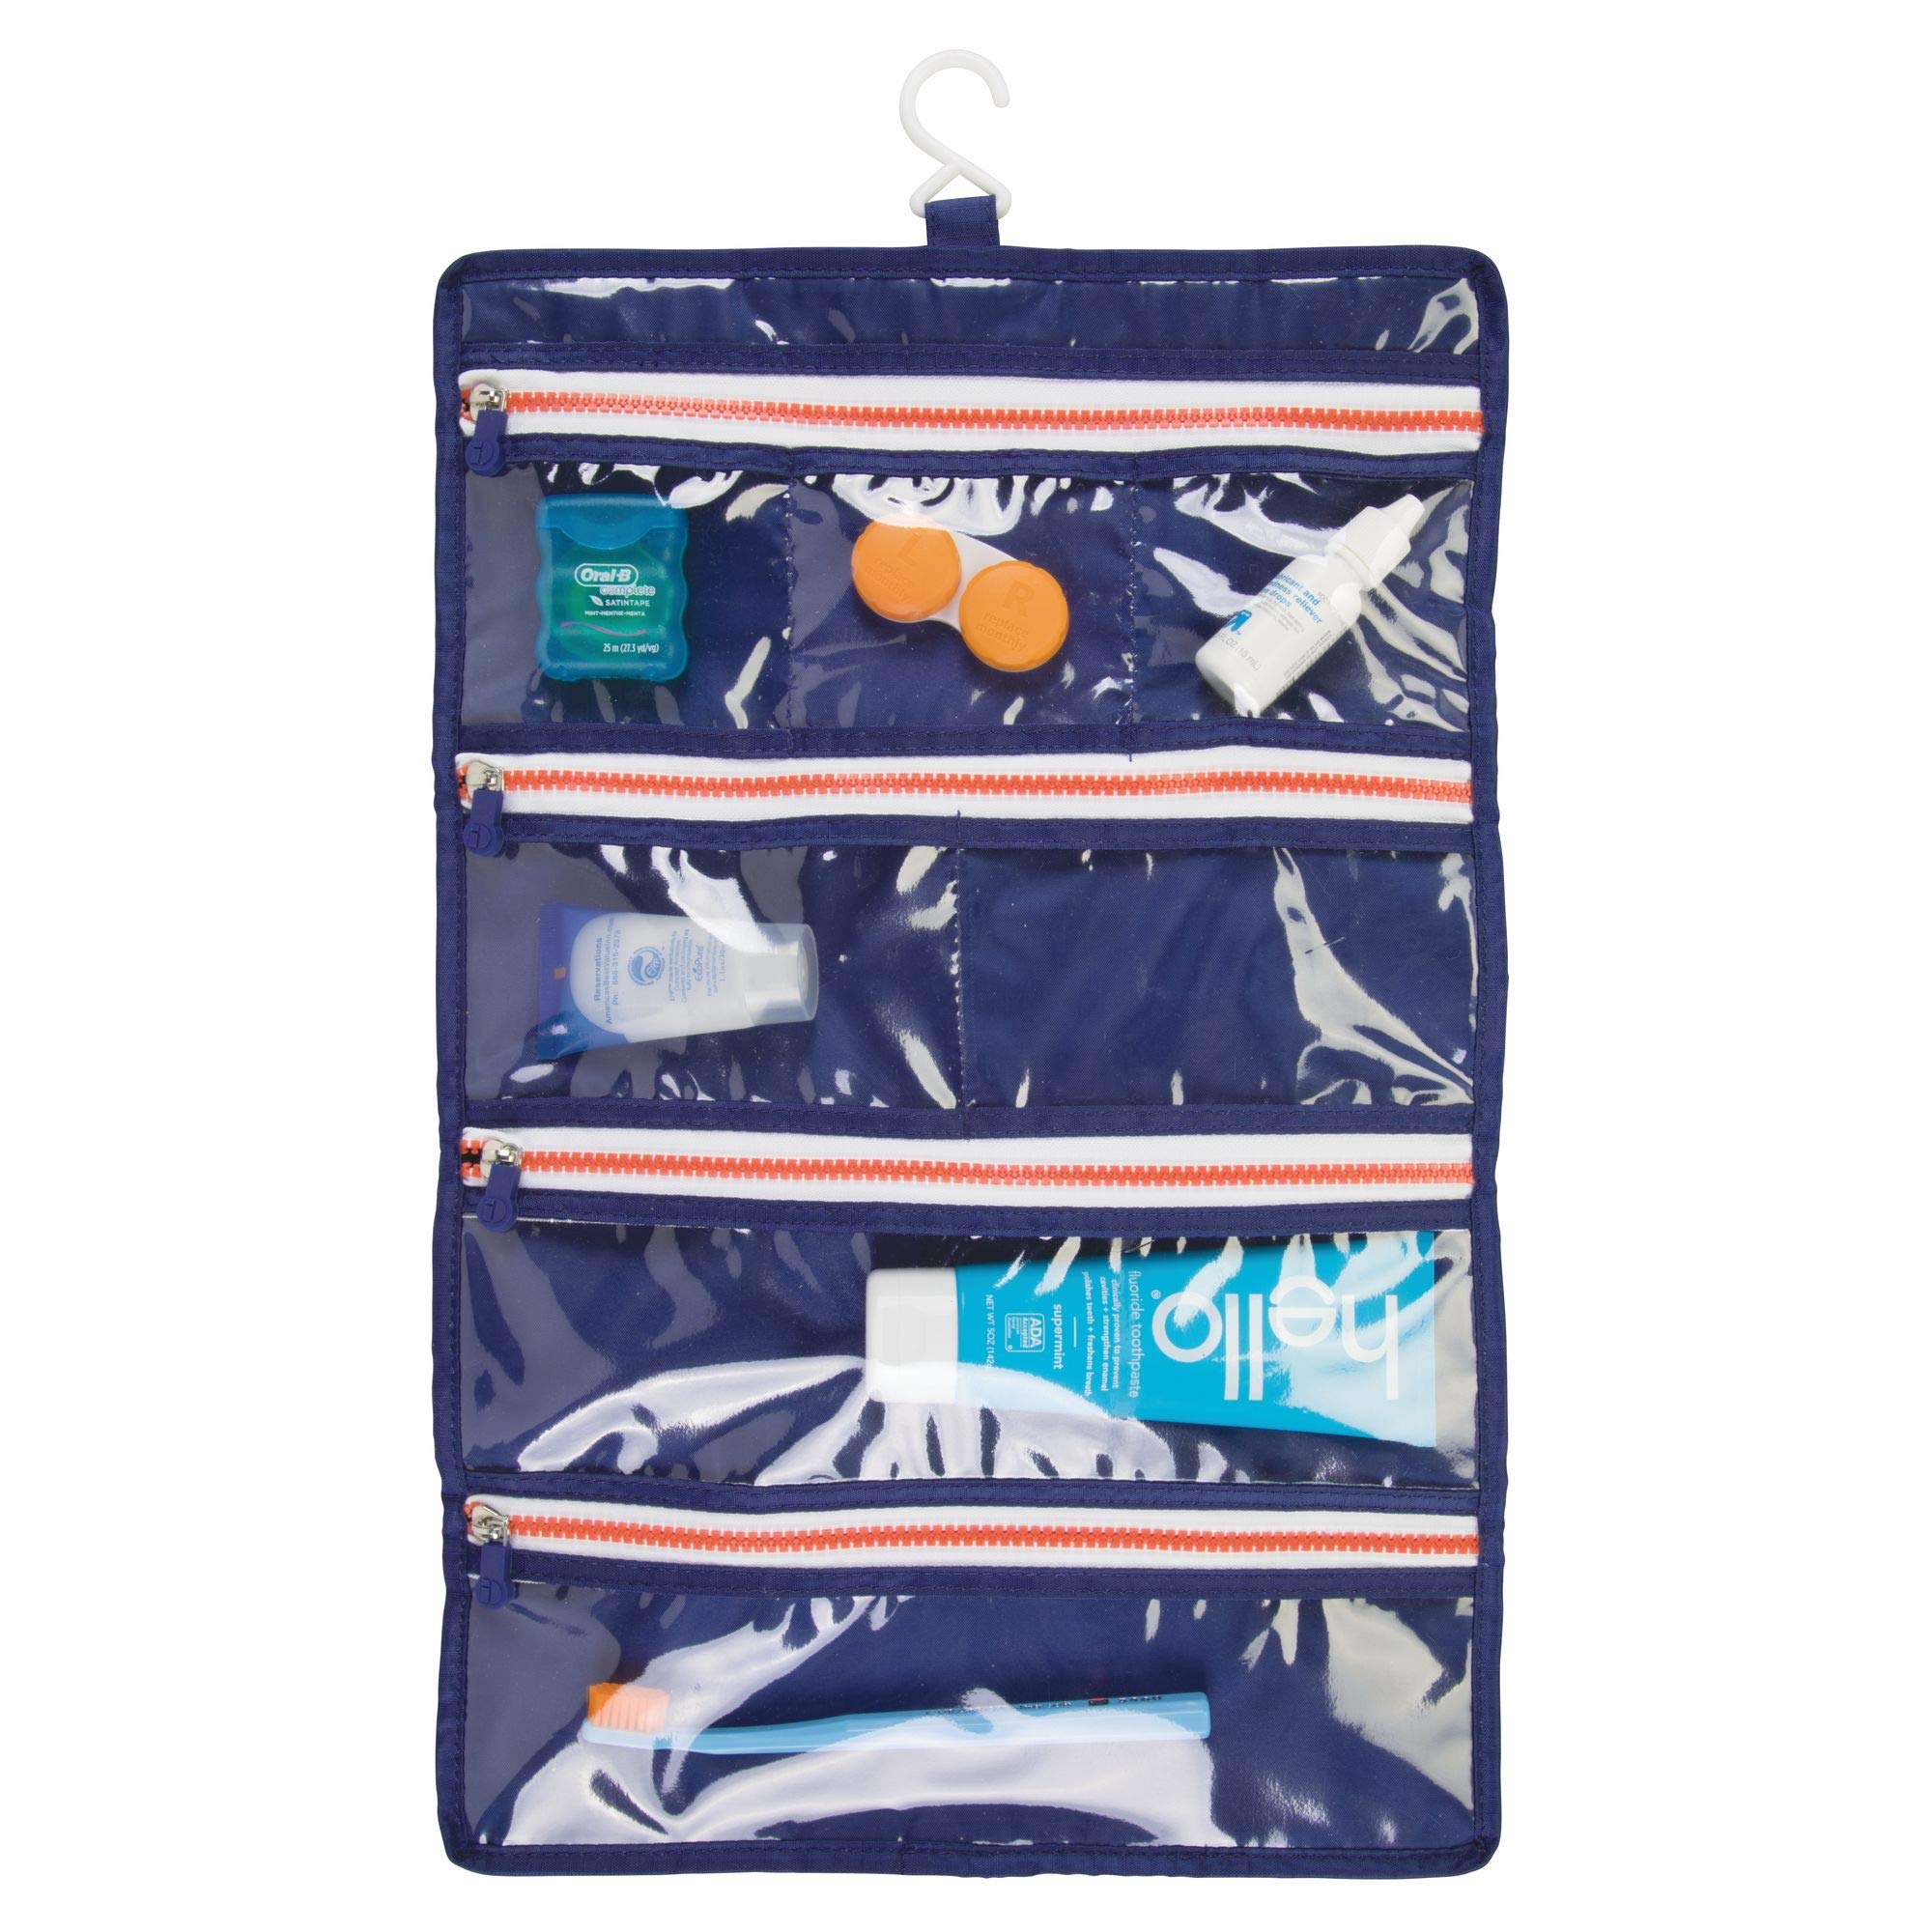 iDesign Roll-Up Jewelry Case Travel Bag, Navy/Orange